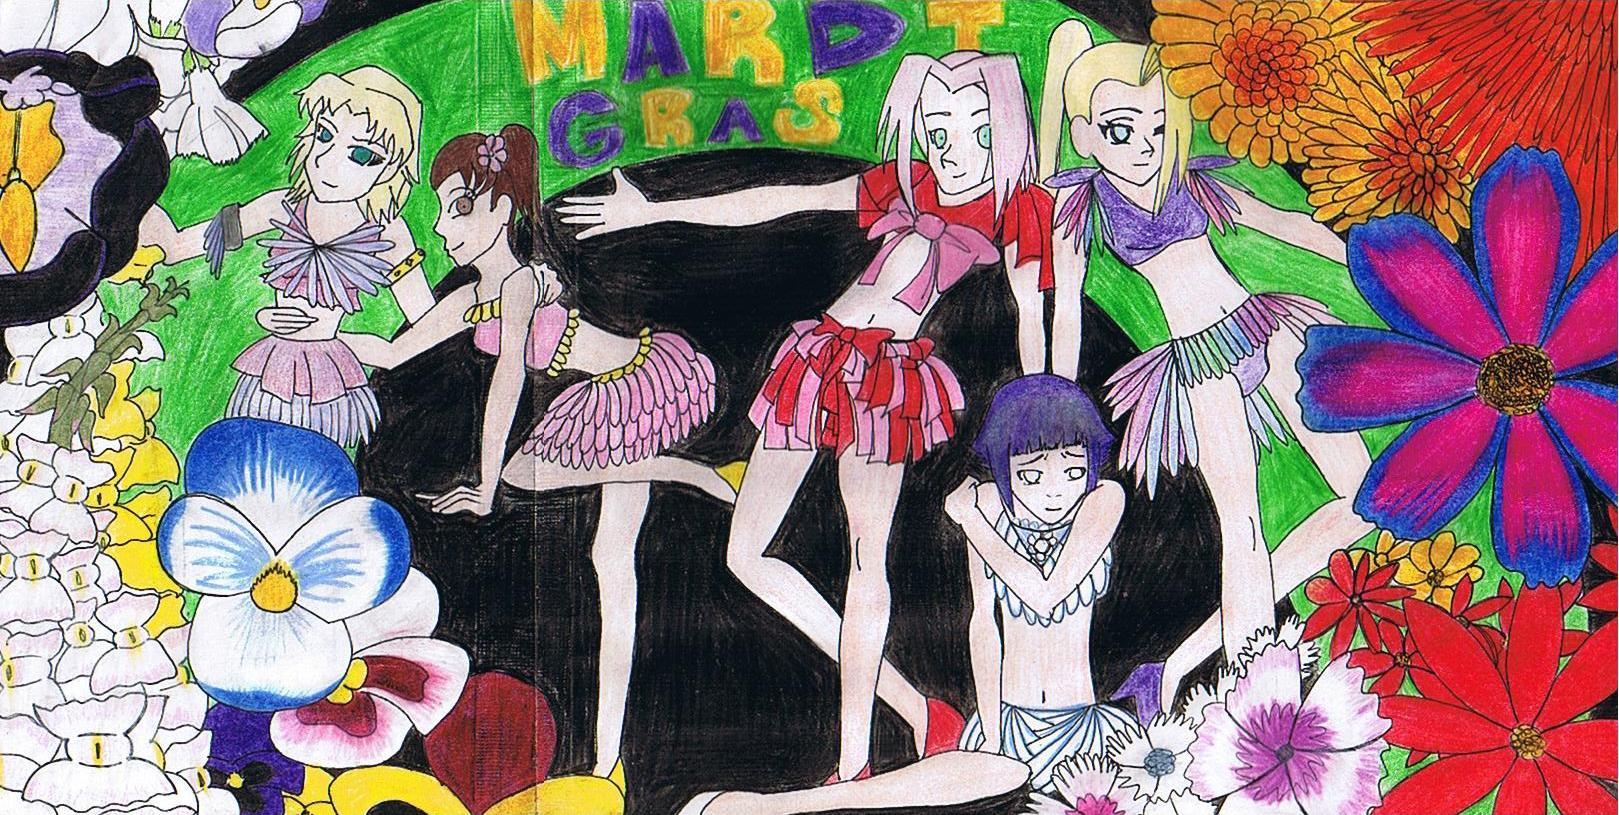 Mardi-Gras [Naruto Contest] by The_Twilight_Pen